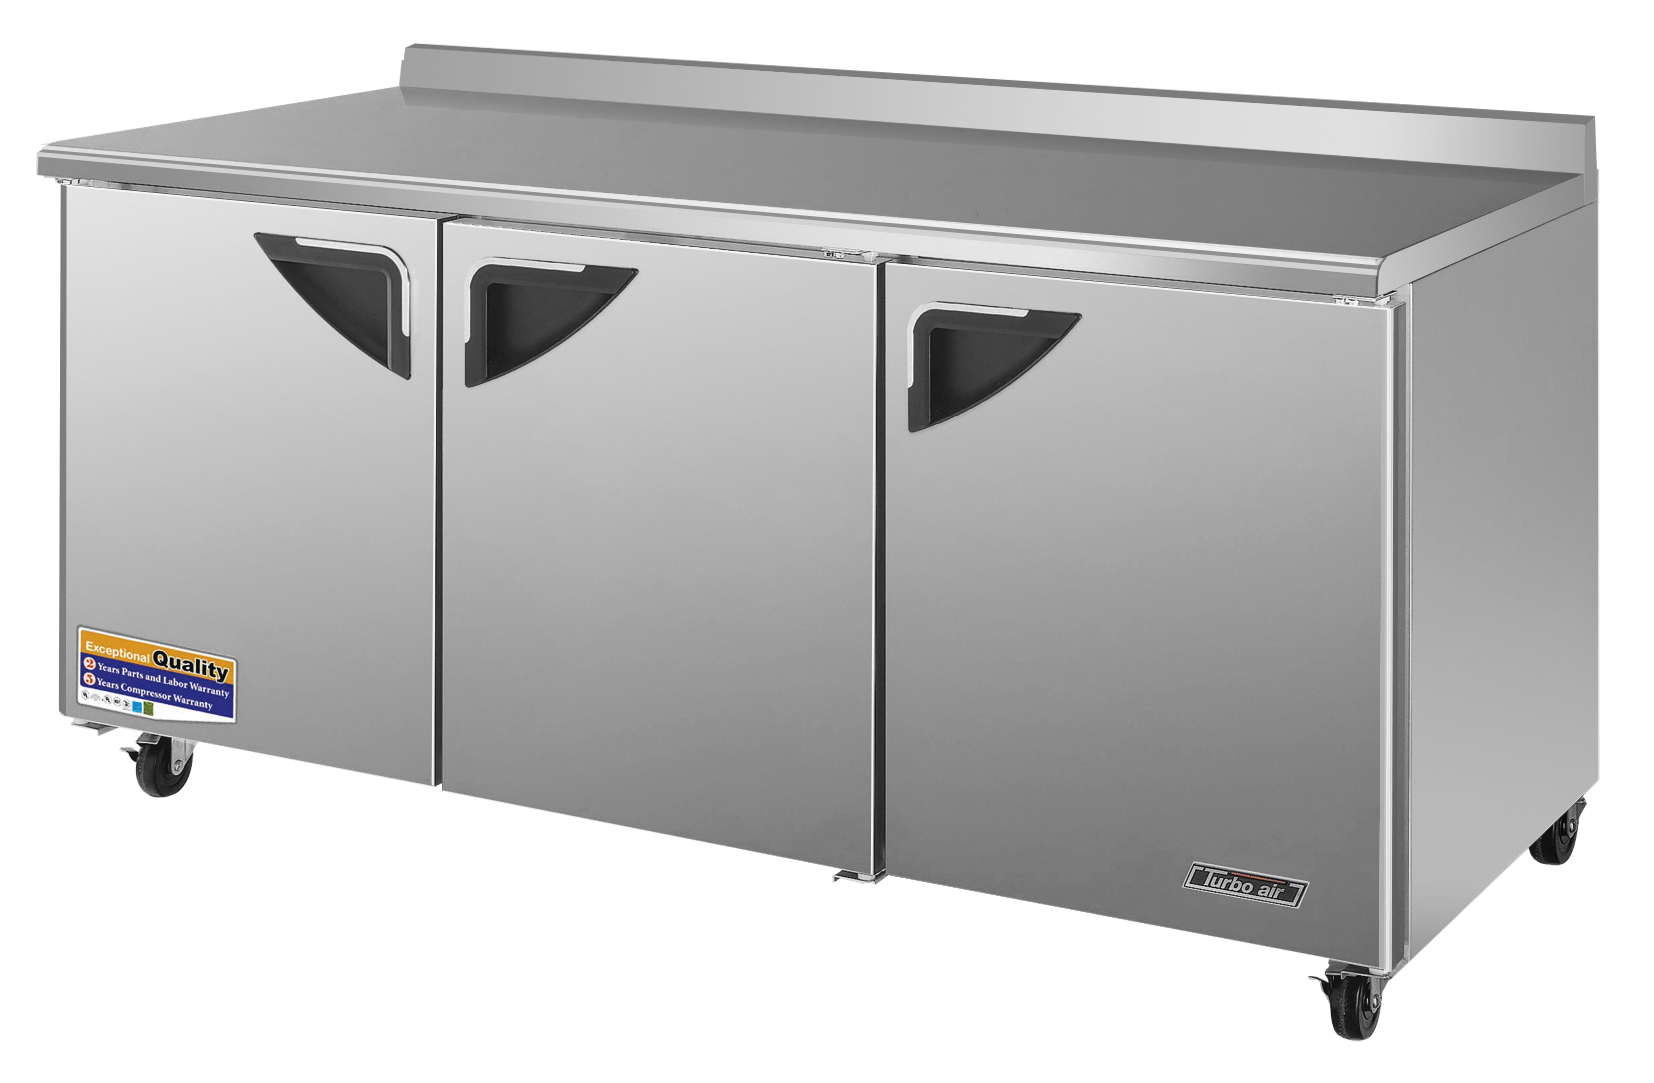 Super Deluxe Worktop Refrigerator, three-section